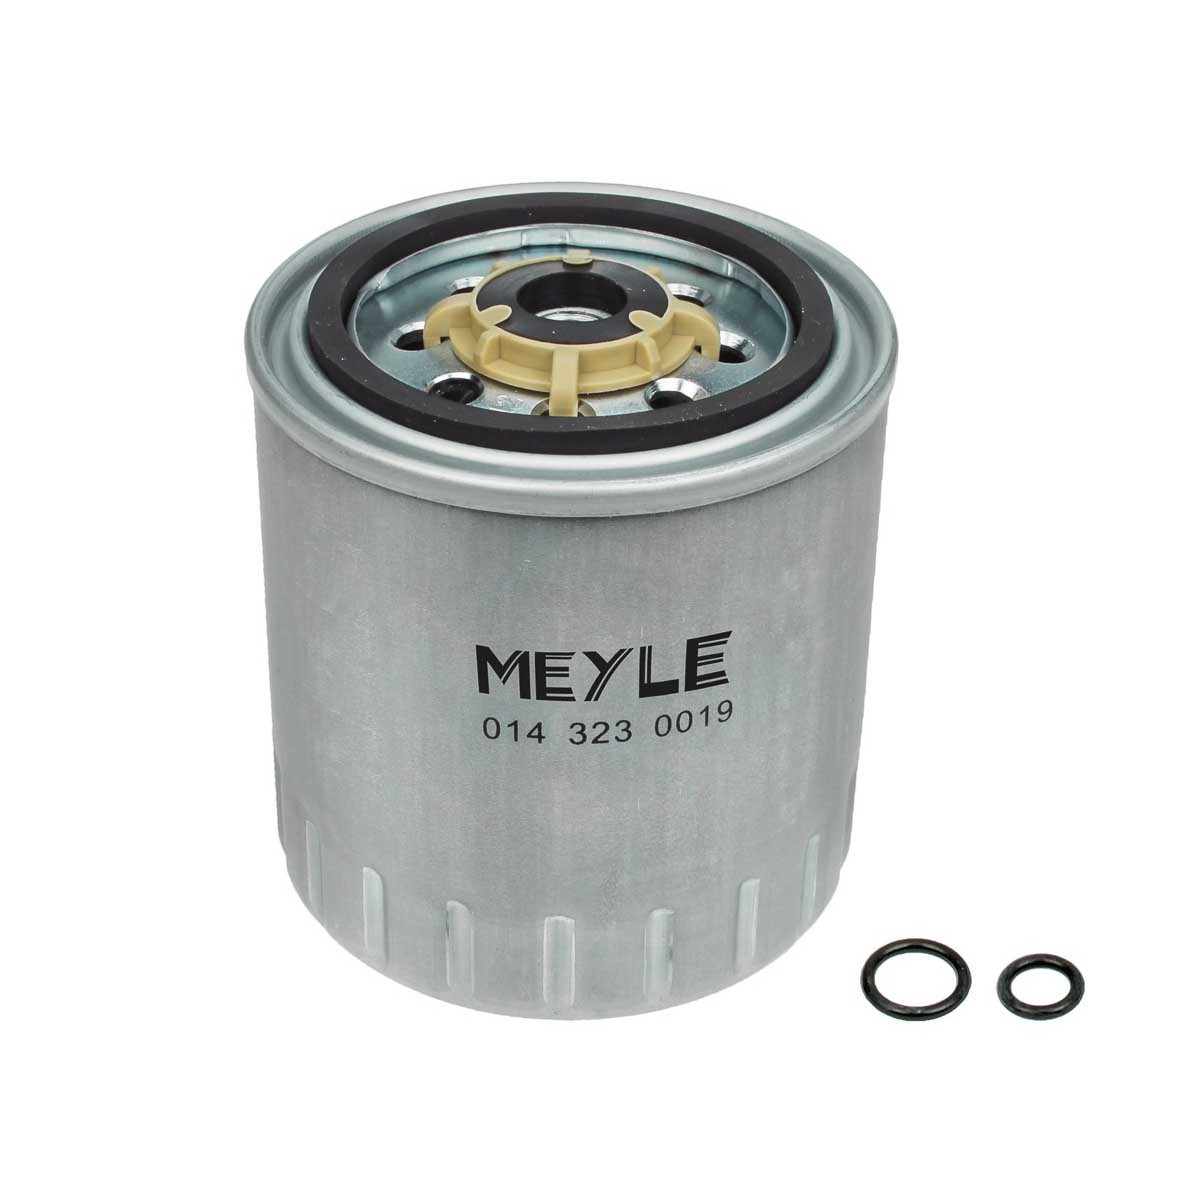 MFF0262 MEYLE 0143230019 Fuel filter A661 092 3101